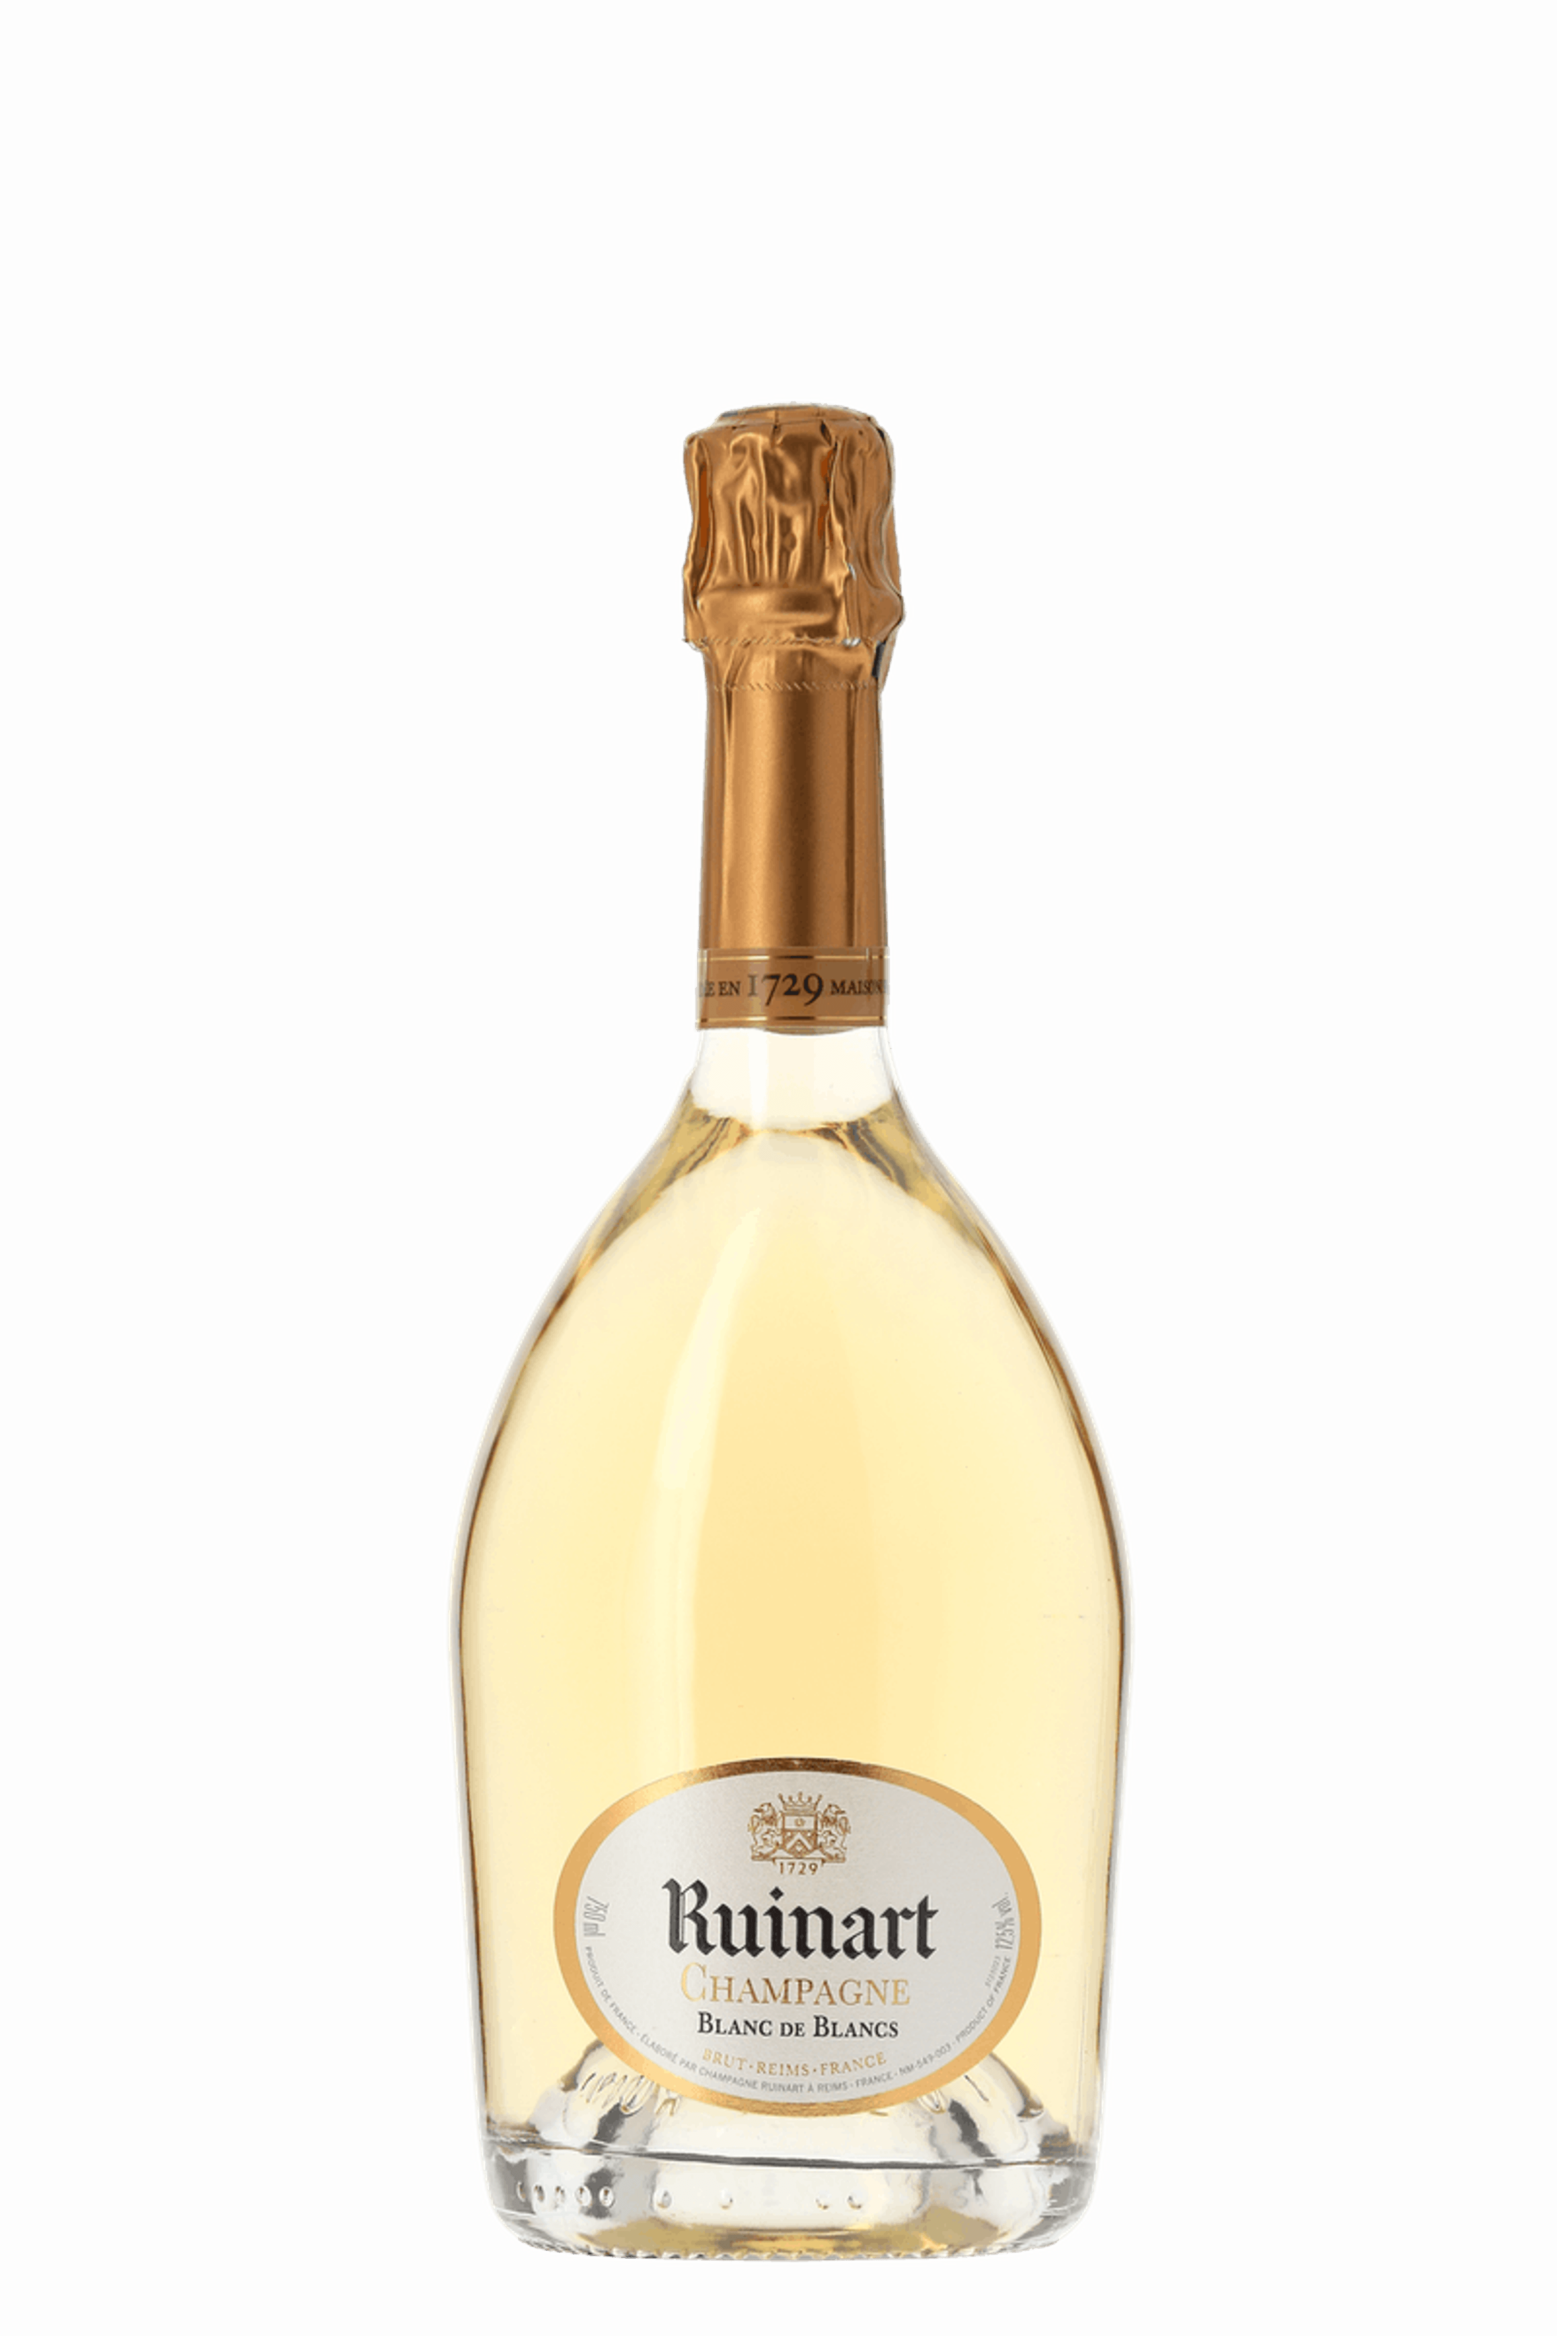 Champagne Blanc de Blancs Ruinart NM